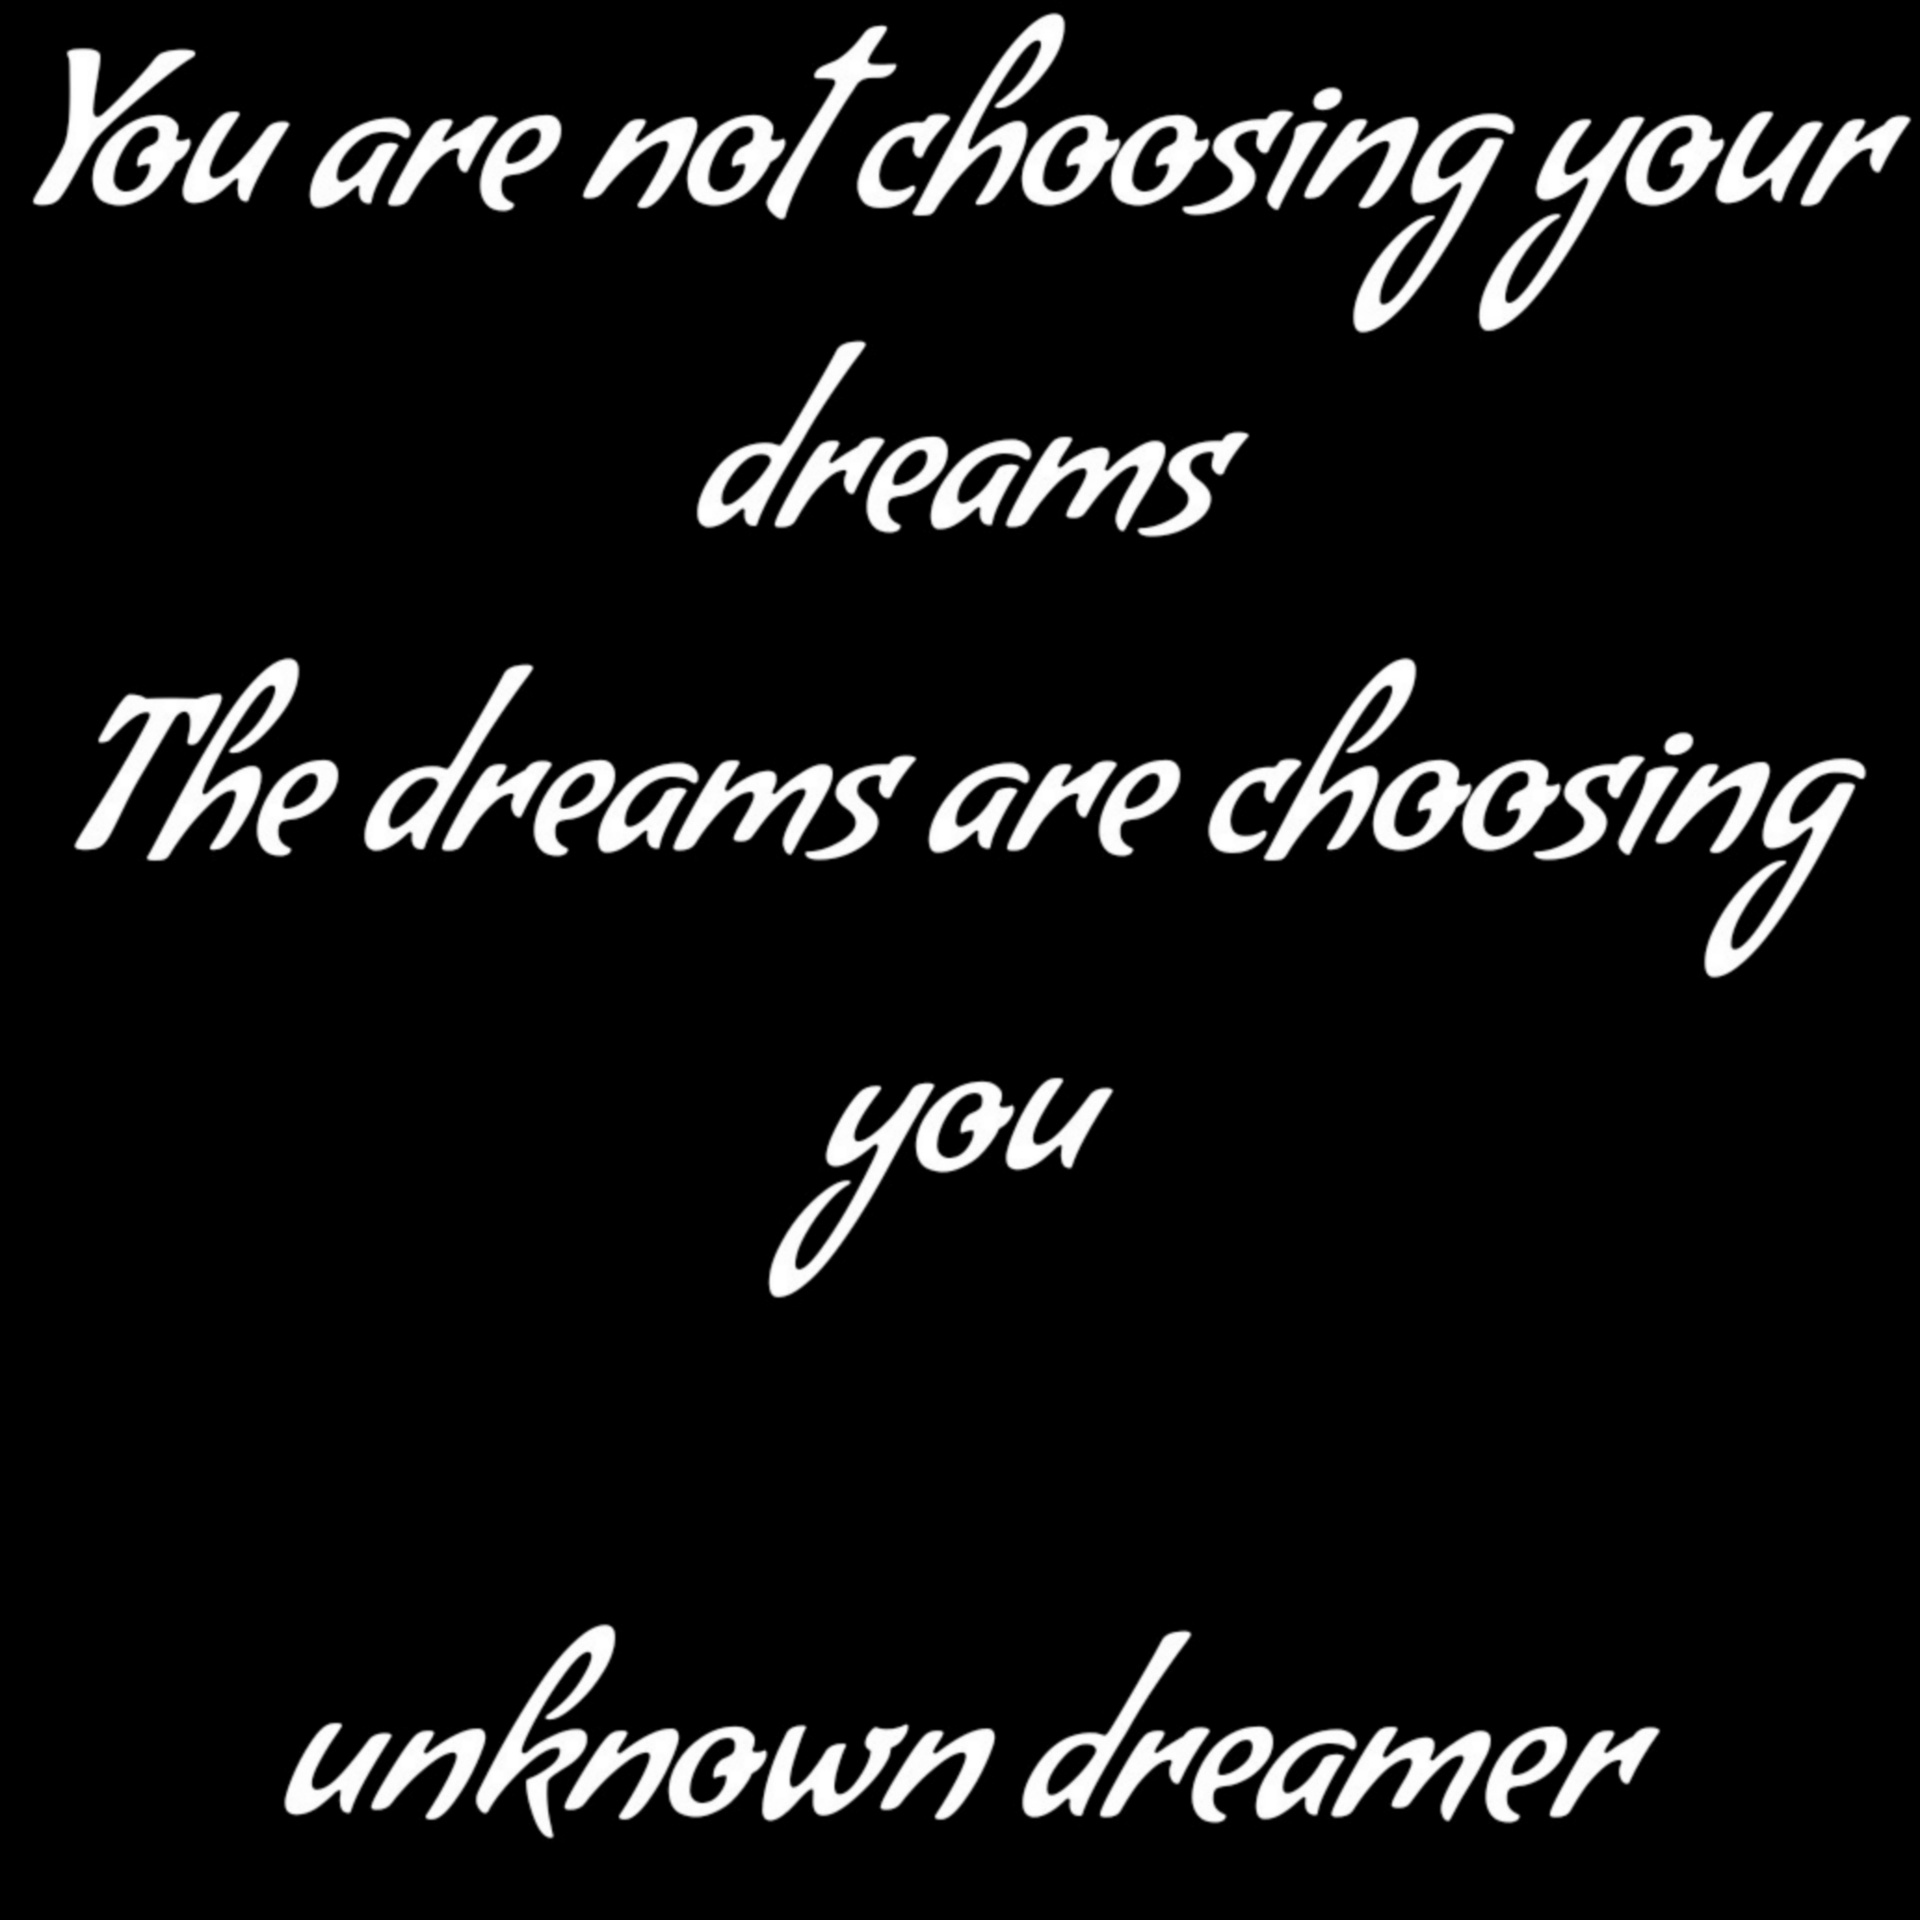 Choosing Your Dreams